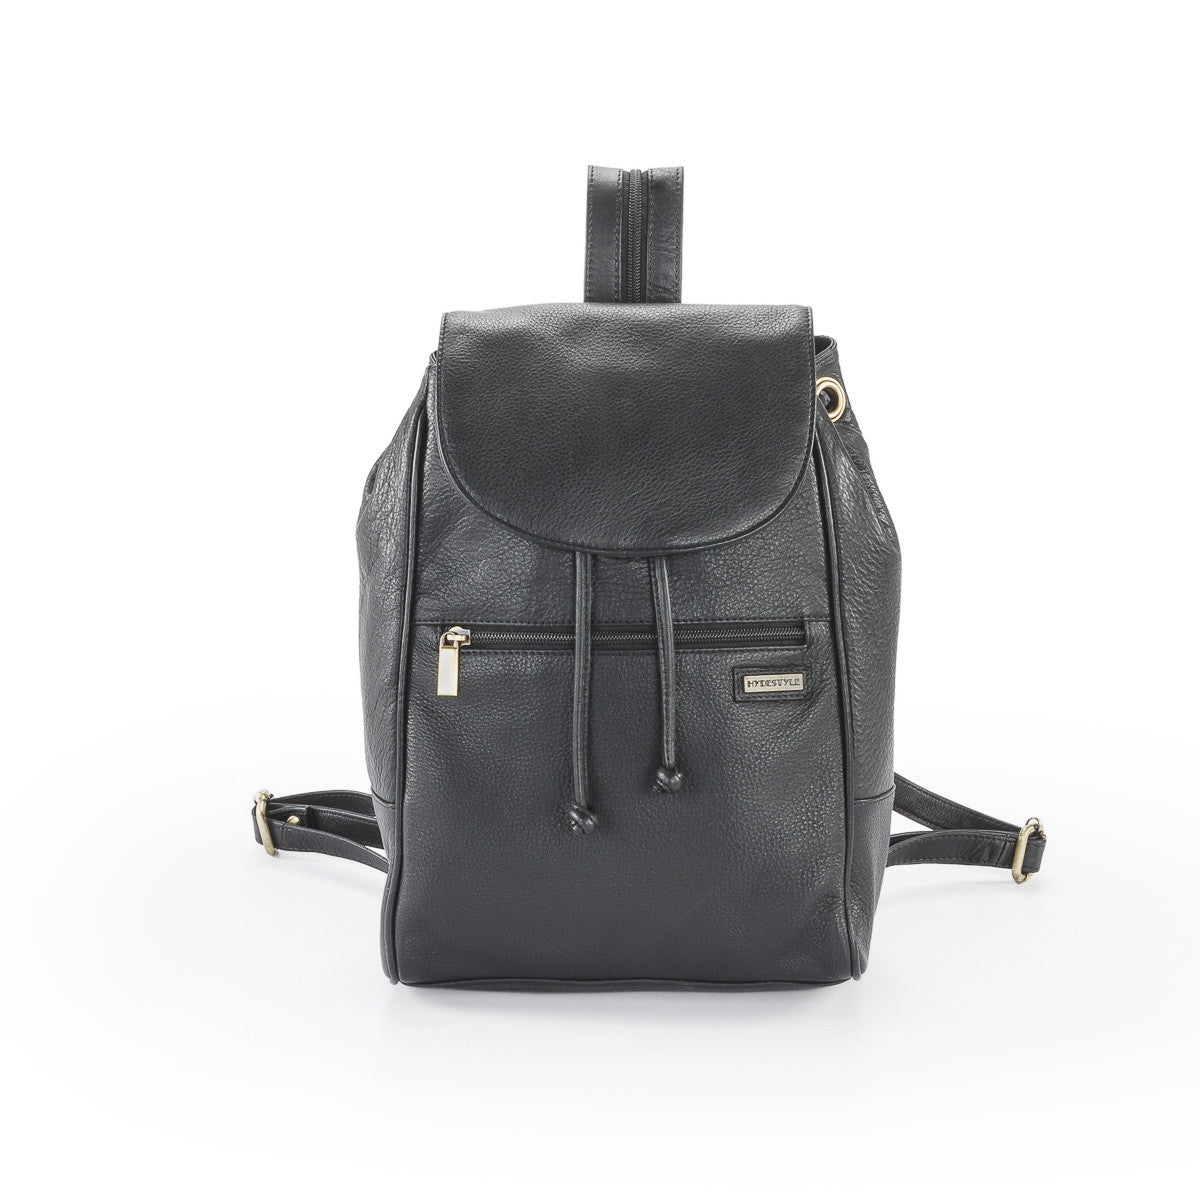 Pratico - piccolo leather backpack #UM35 Black